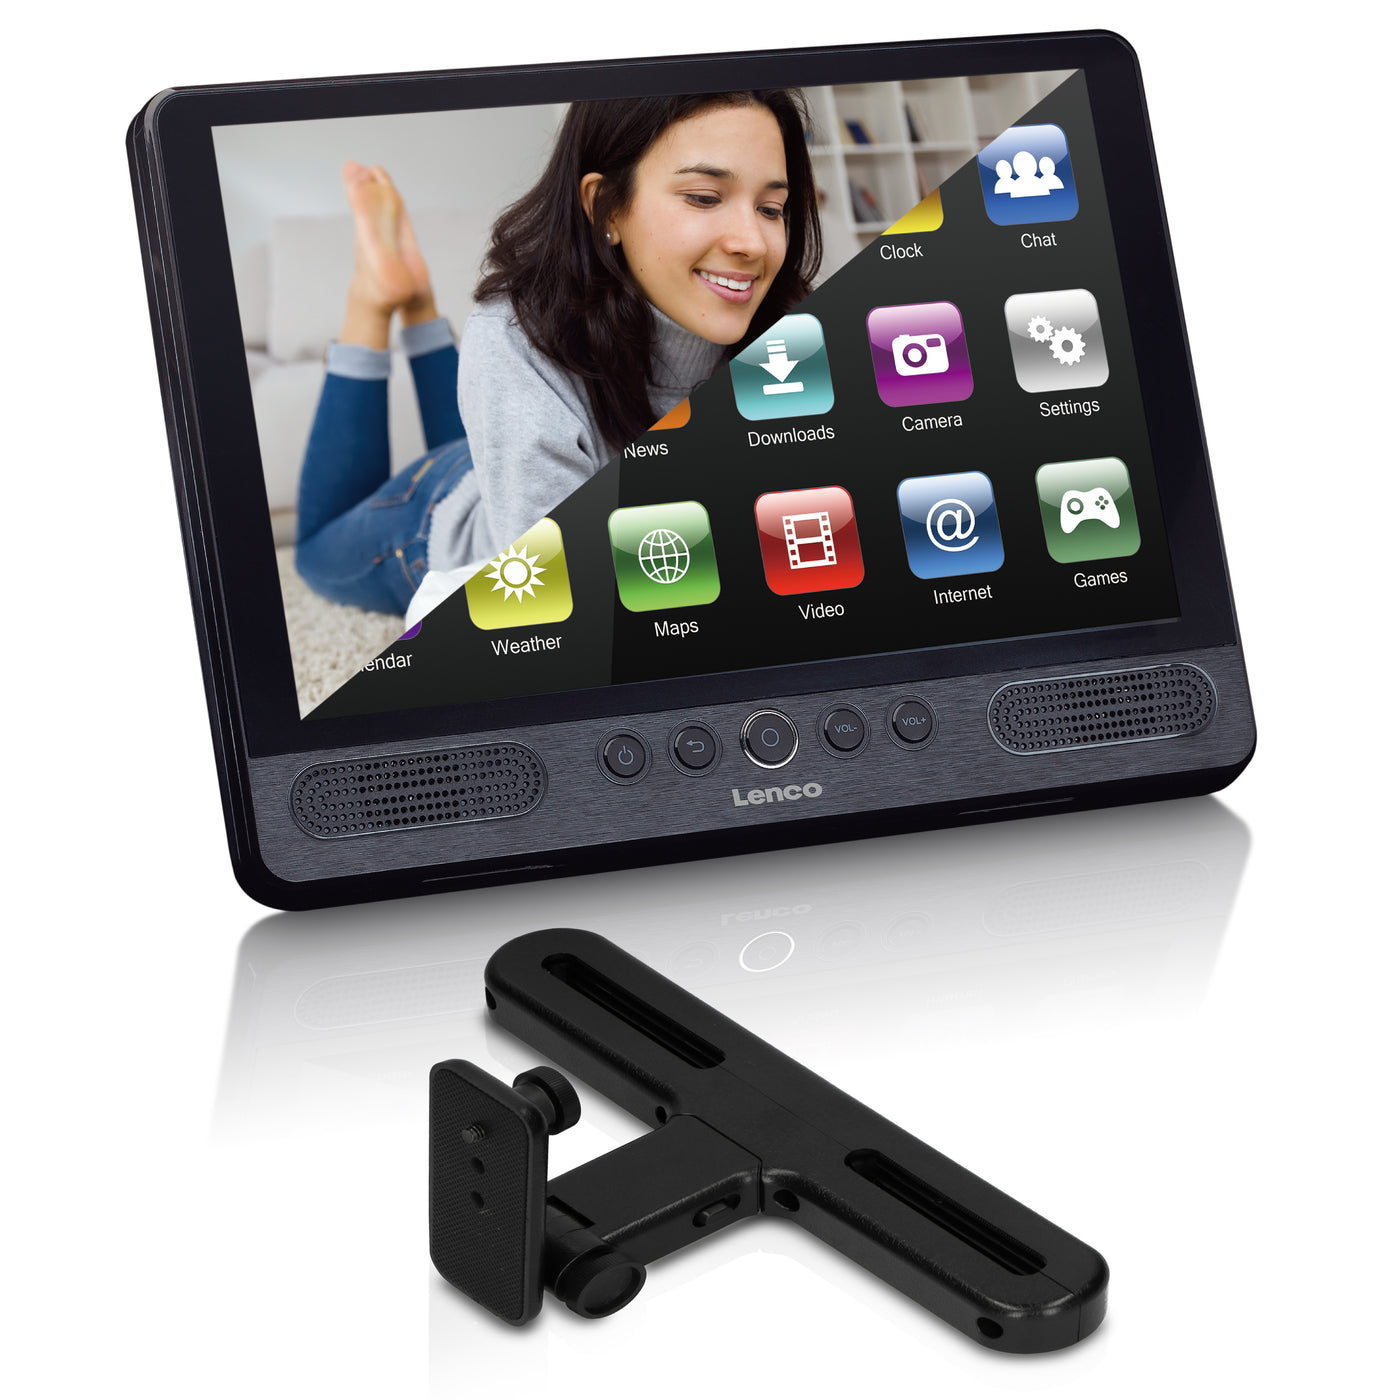 LENCO TDV1001BK - Tablet WIFI DVD Lenco – - USB -Catalog - Android player - Portable